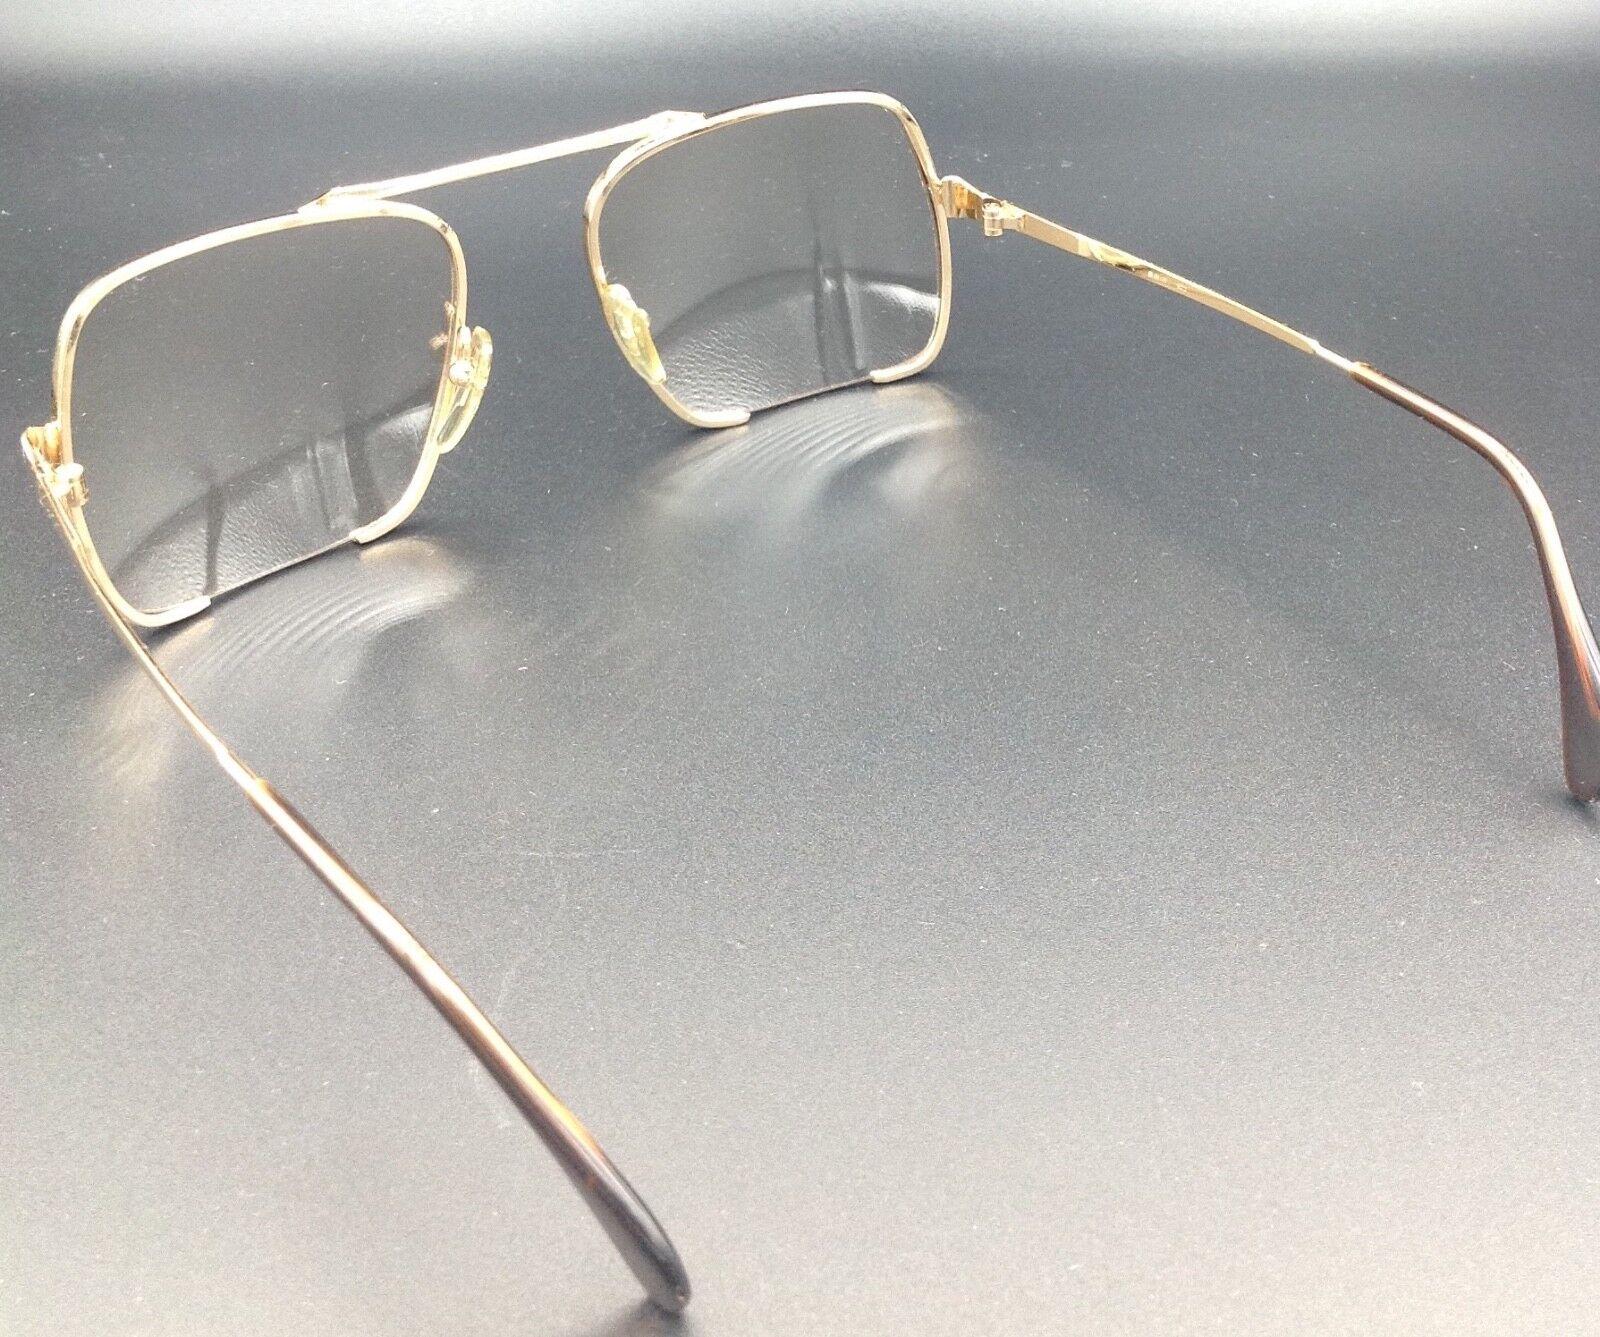 Ray Ban Bausch&Lomb B&L 1/20-10k gold laminated Vintage oro laminato gold frame eyewear